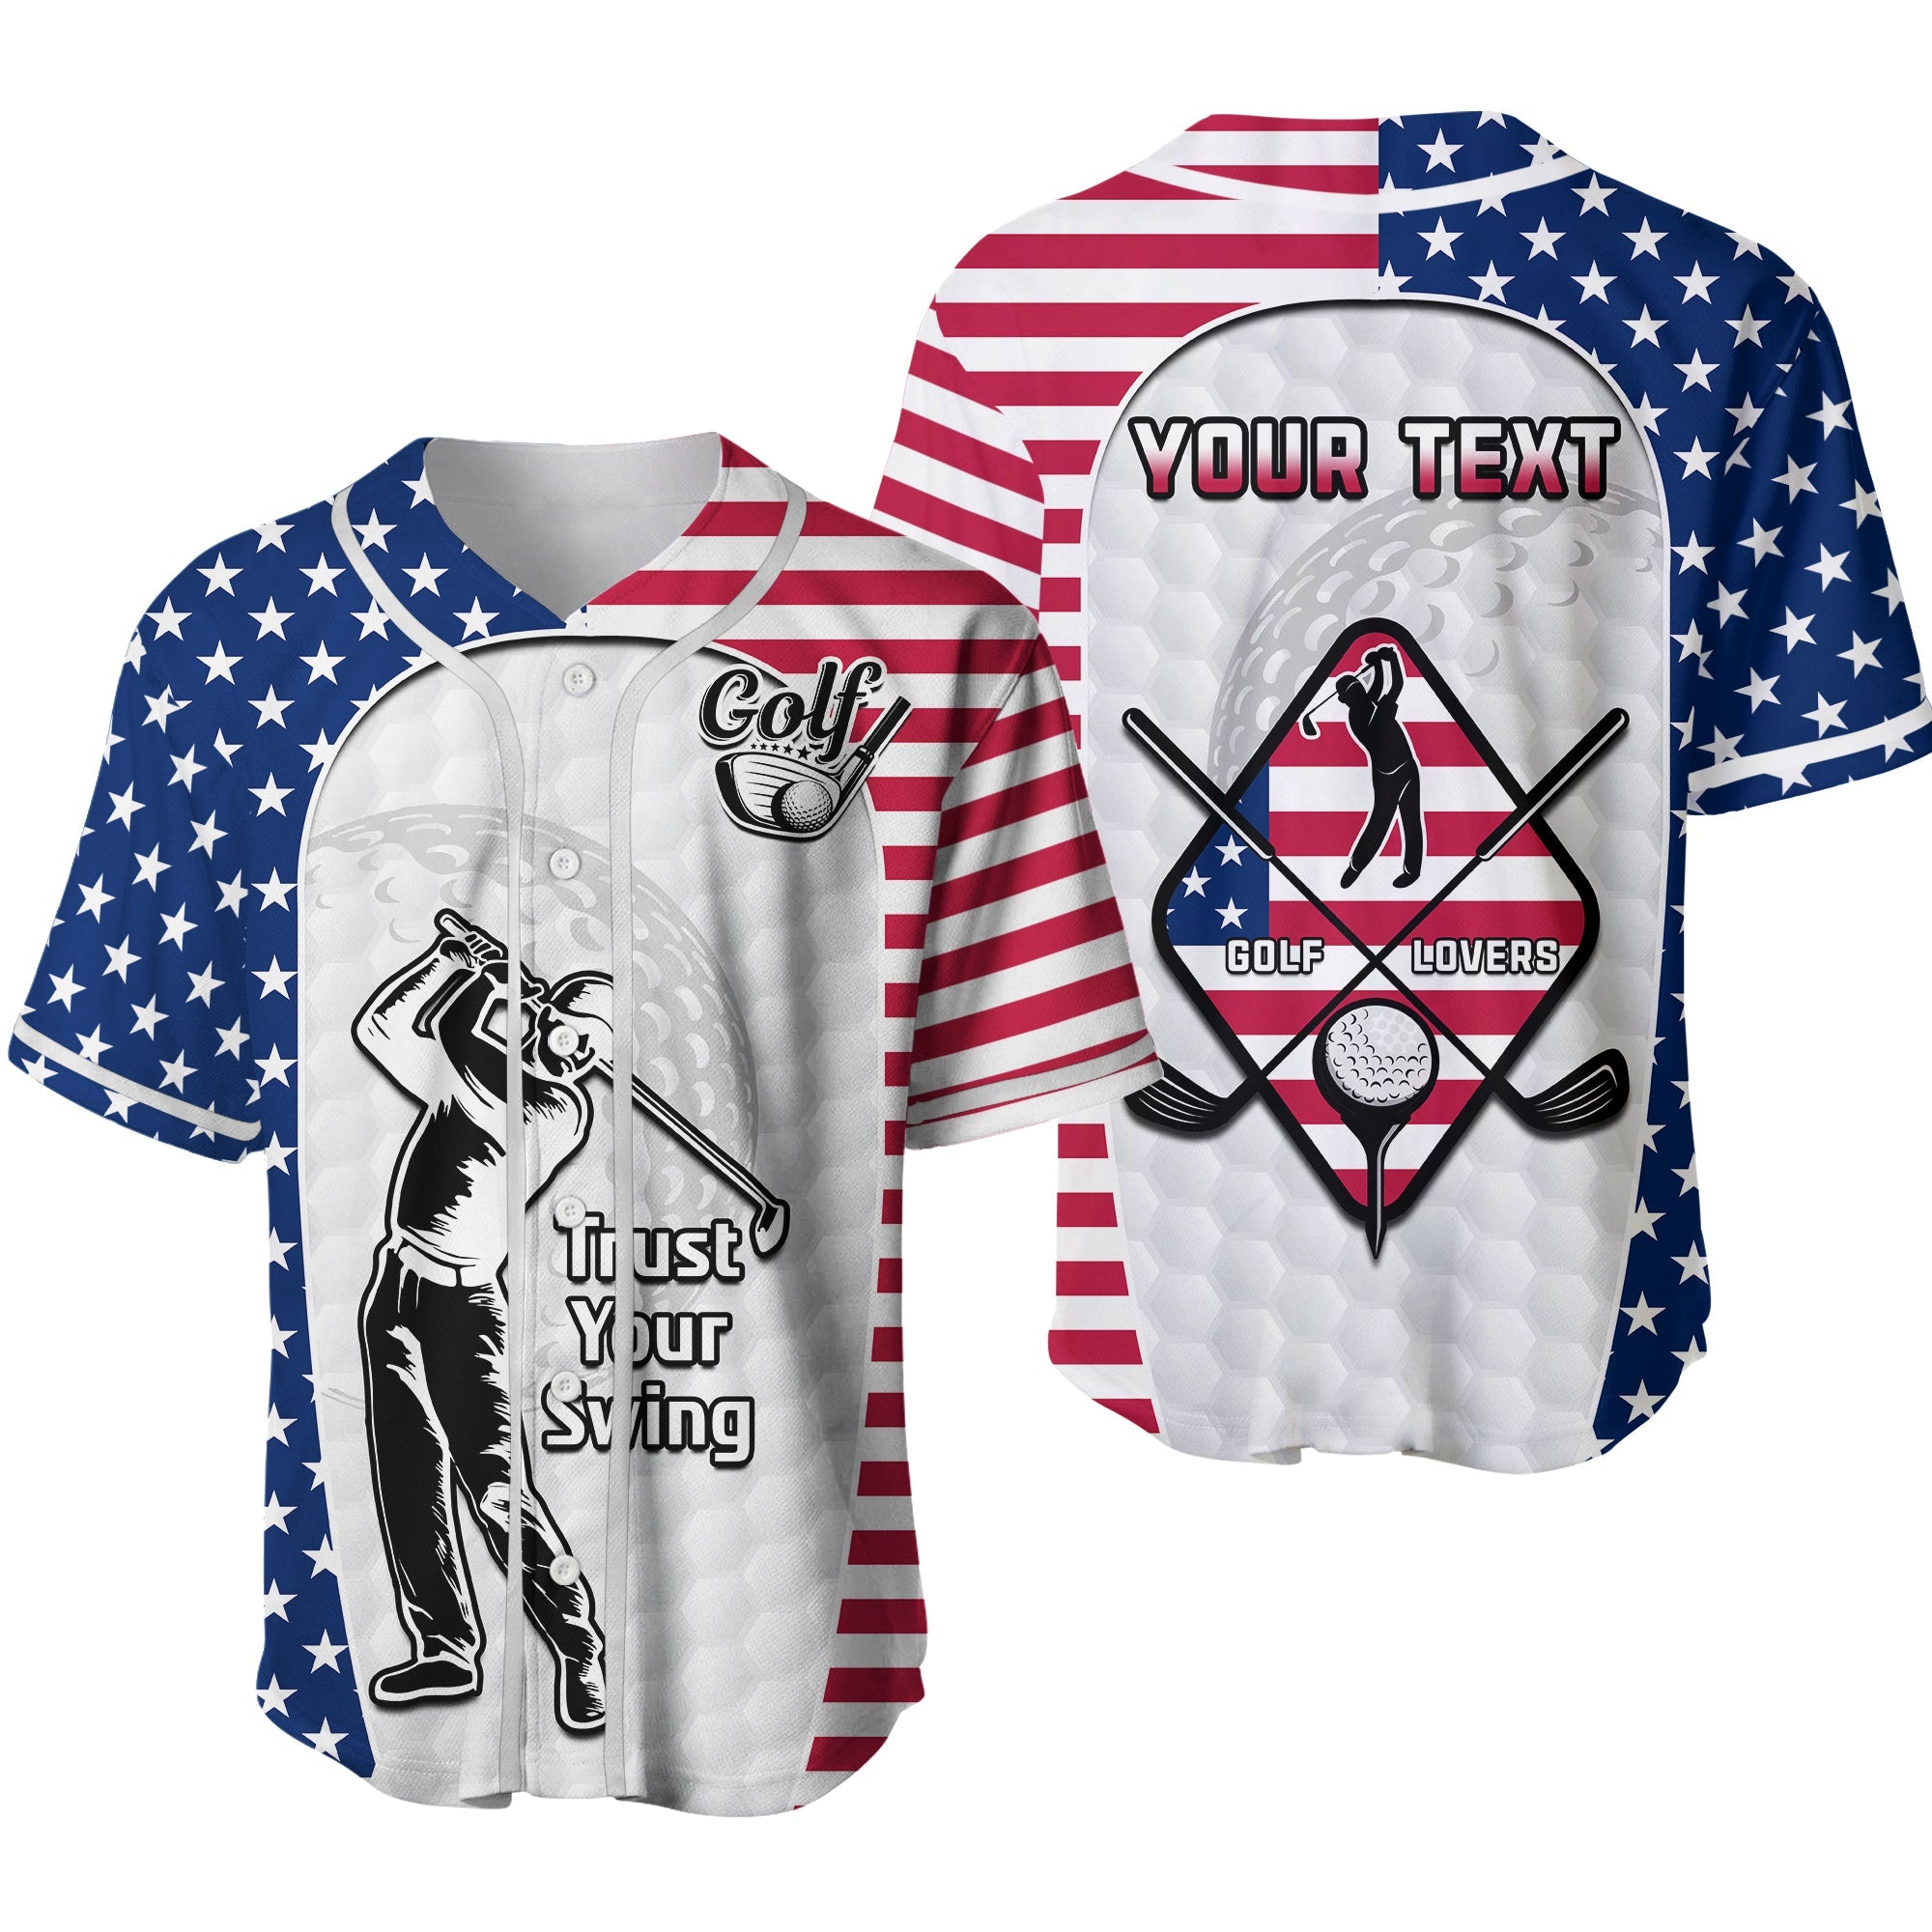 custom-personalised-american-flag-golf-baseball-jersey-gofl-lovers-trust-your-swing-ver02